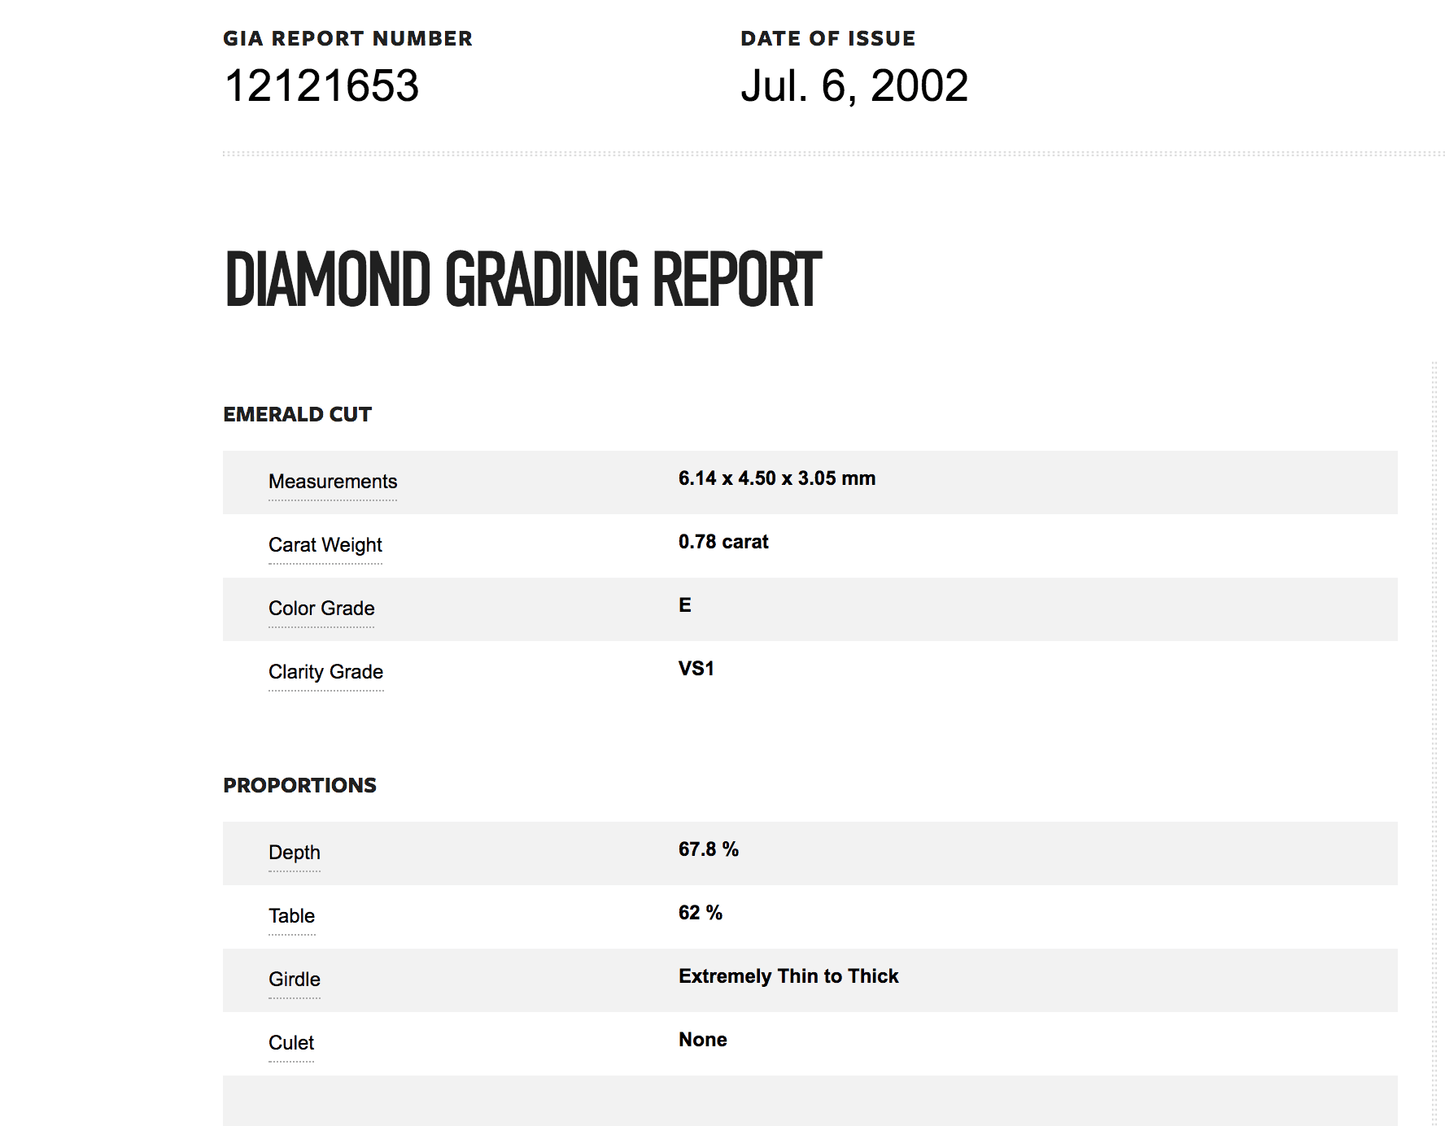 0.78 Carat Emerald Cut Diamond Solitaire Engagement Ring